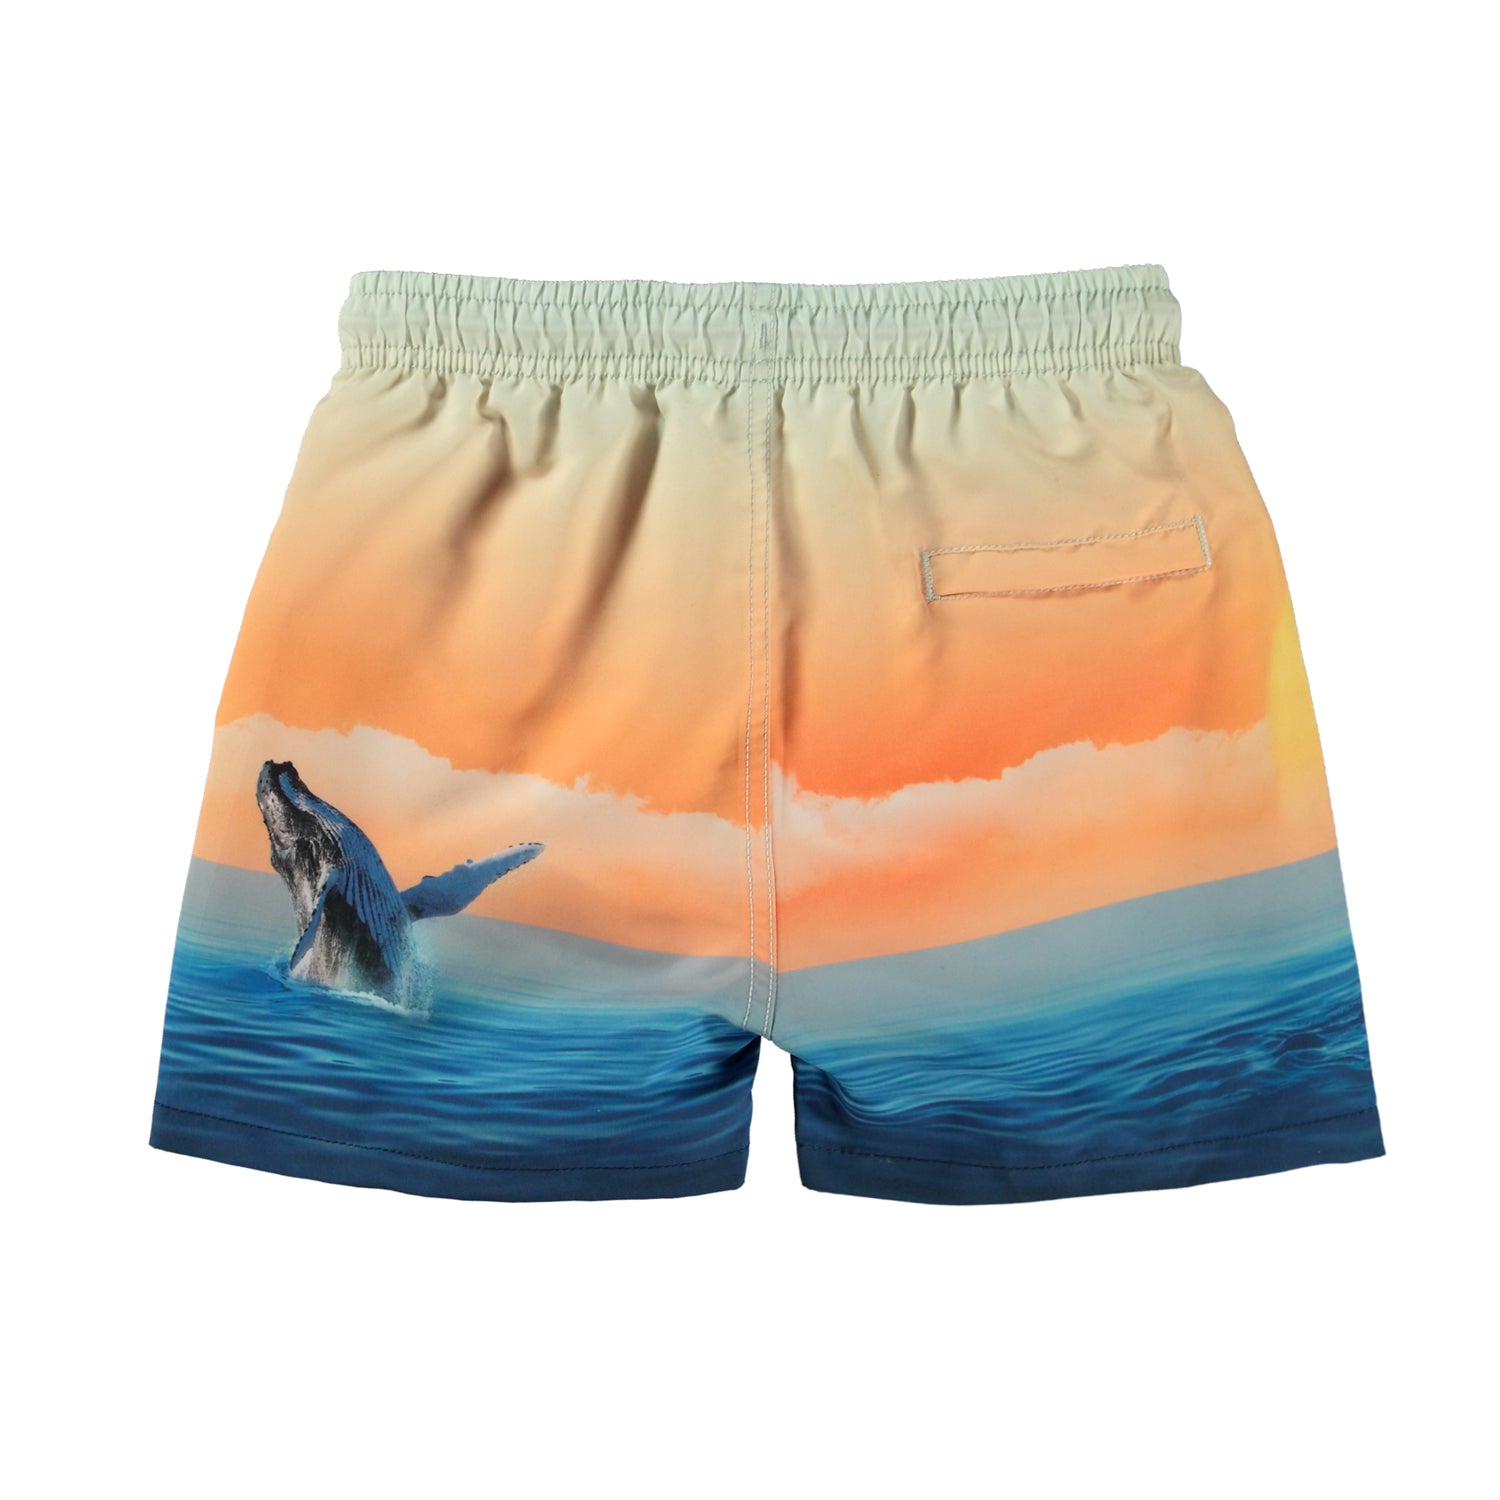 Molo - Niko swim shorts